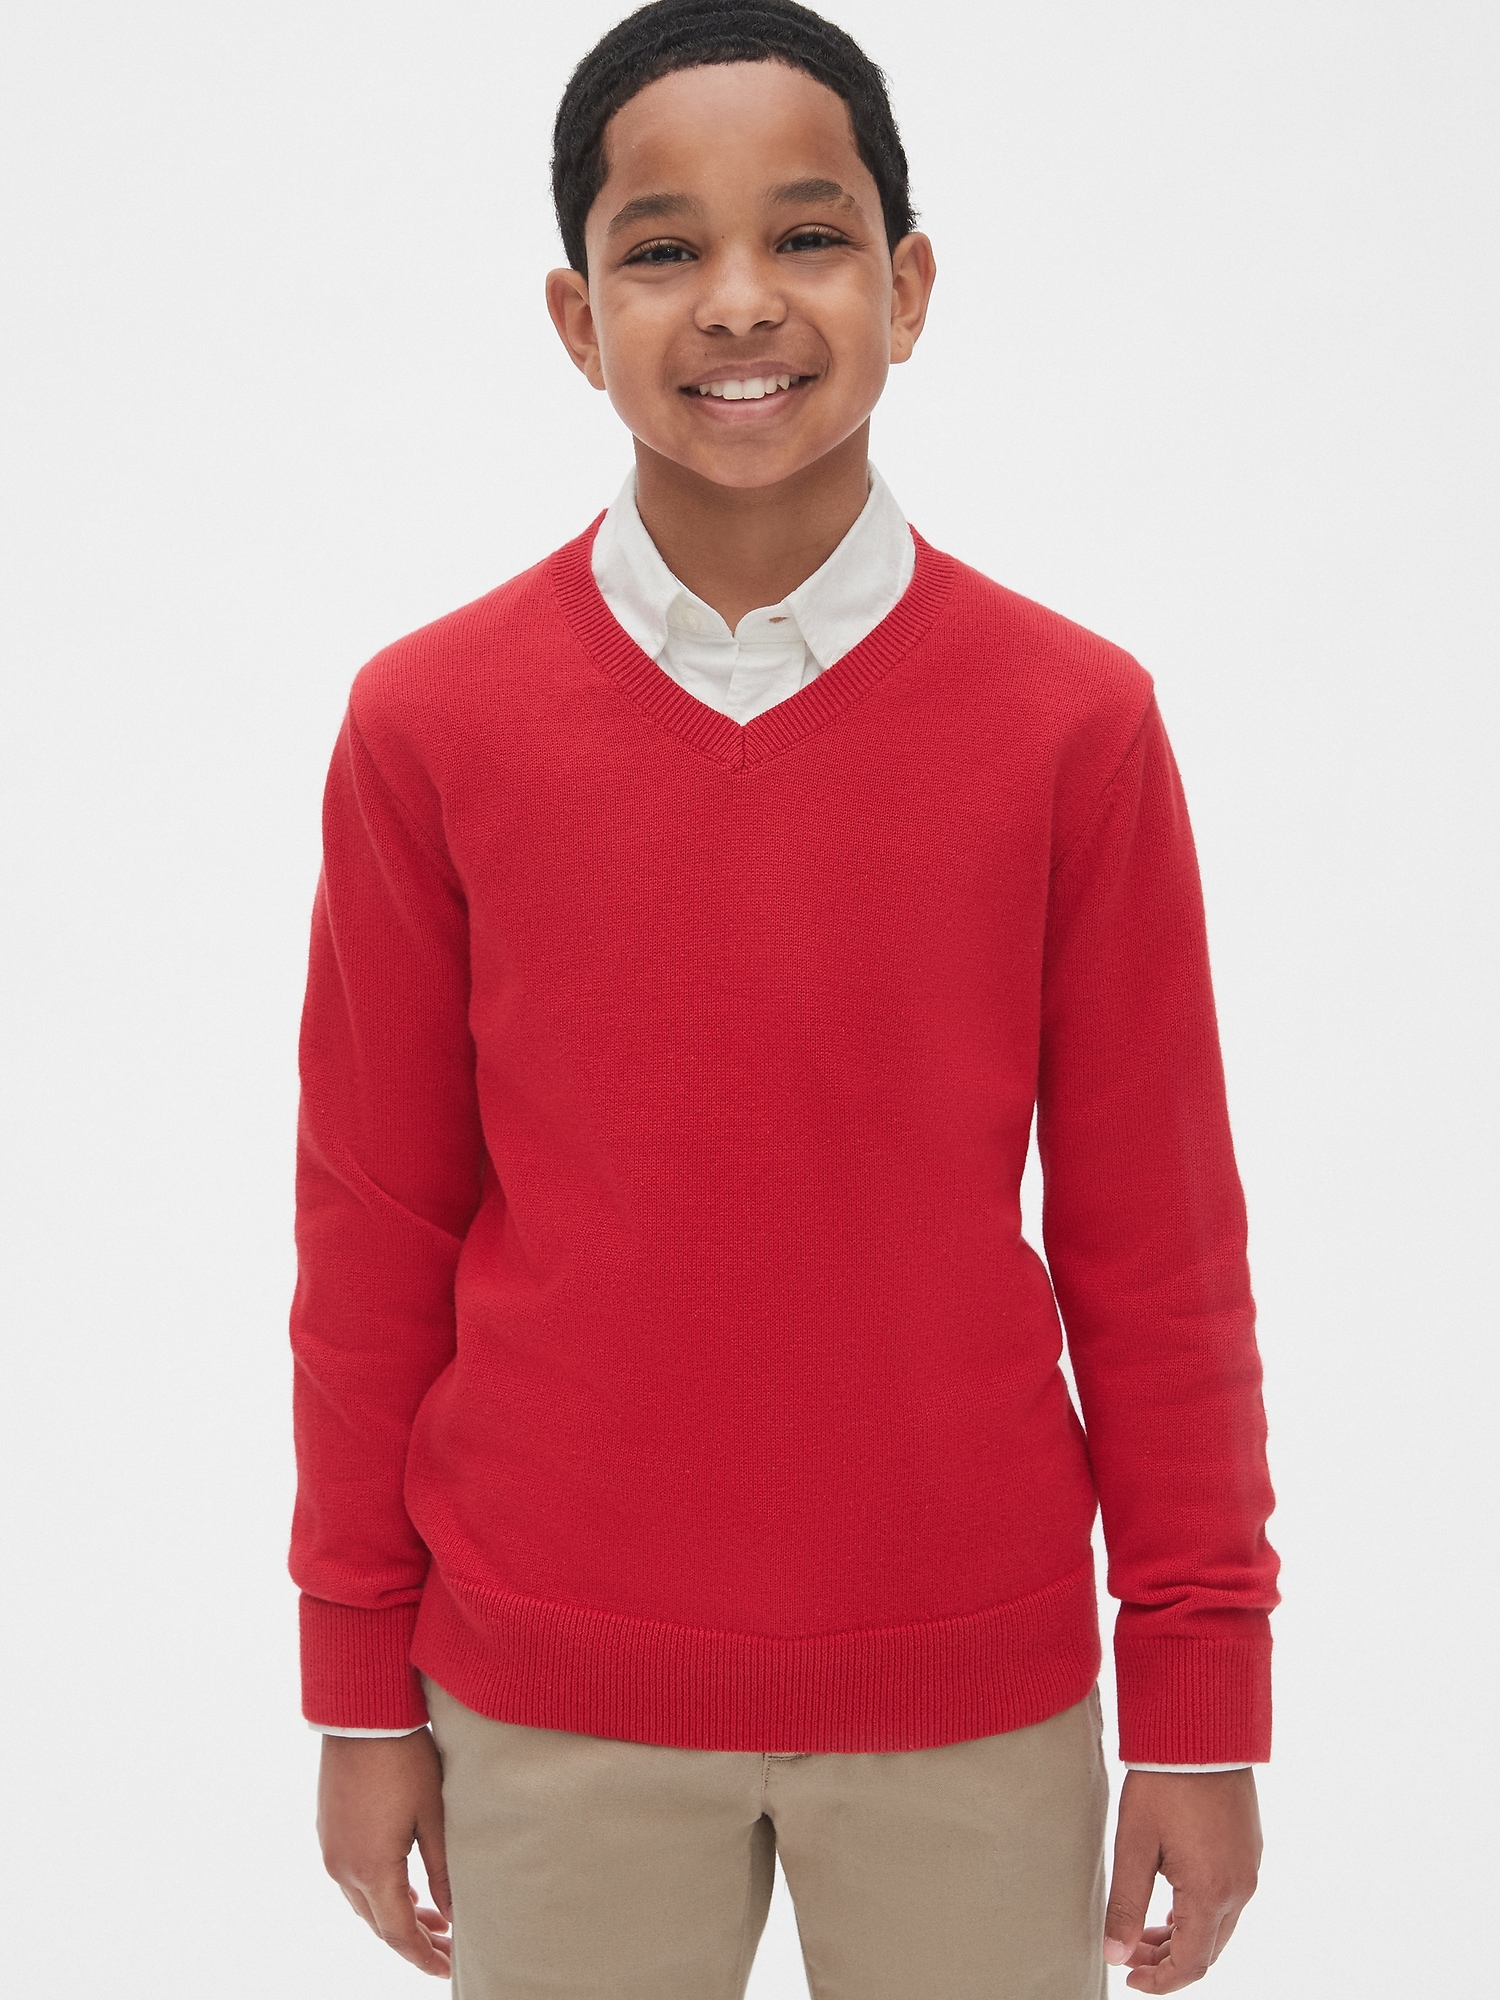 Kids Uniform V-Neck Sweater | Gap